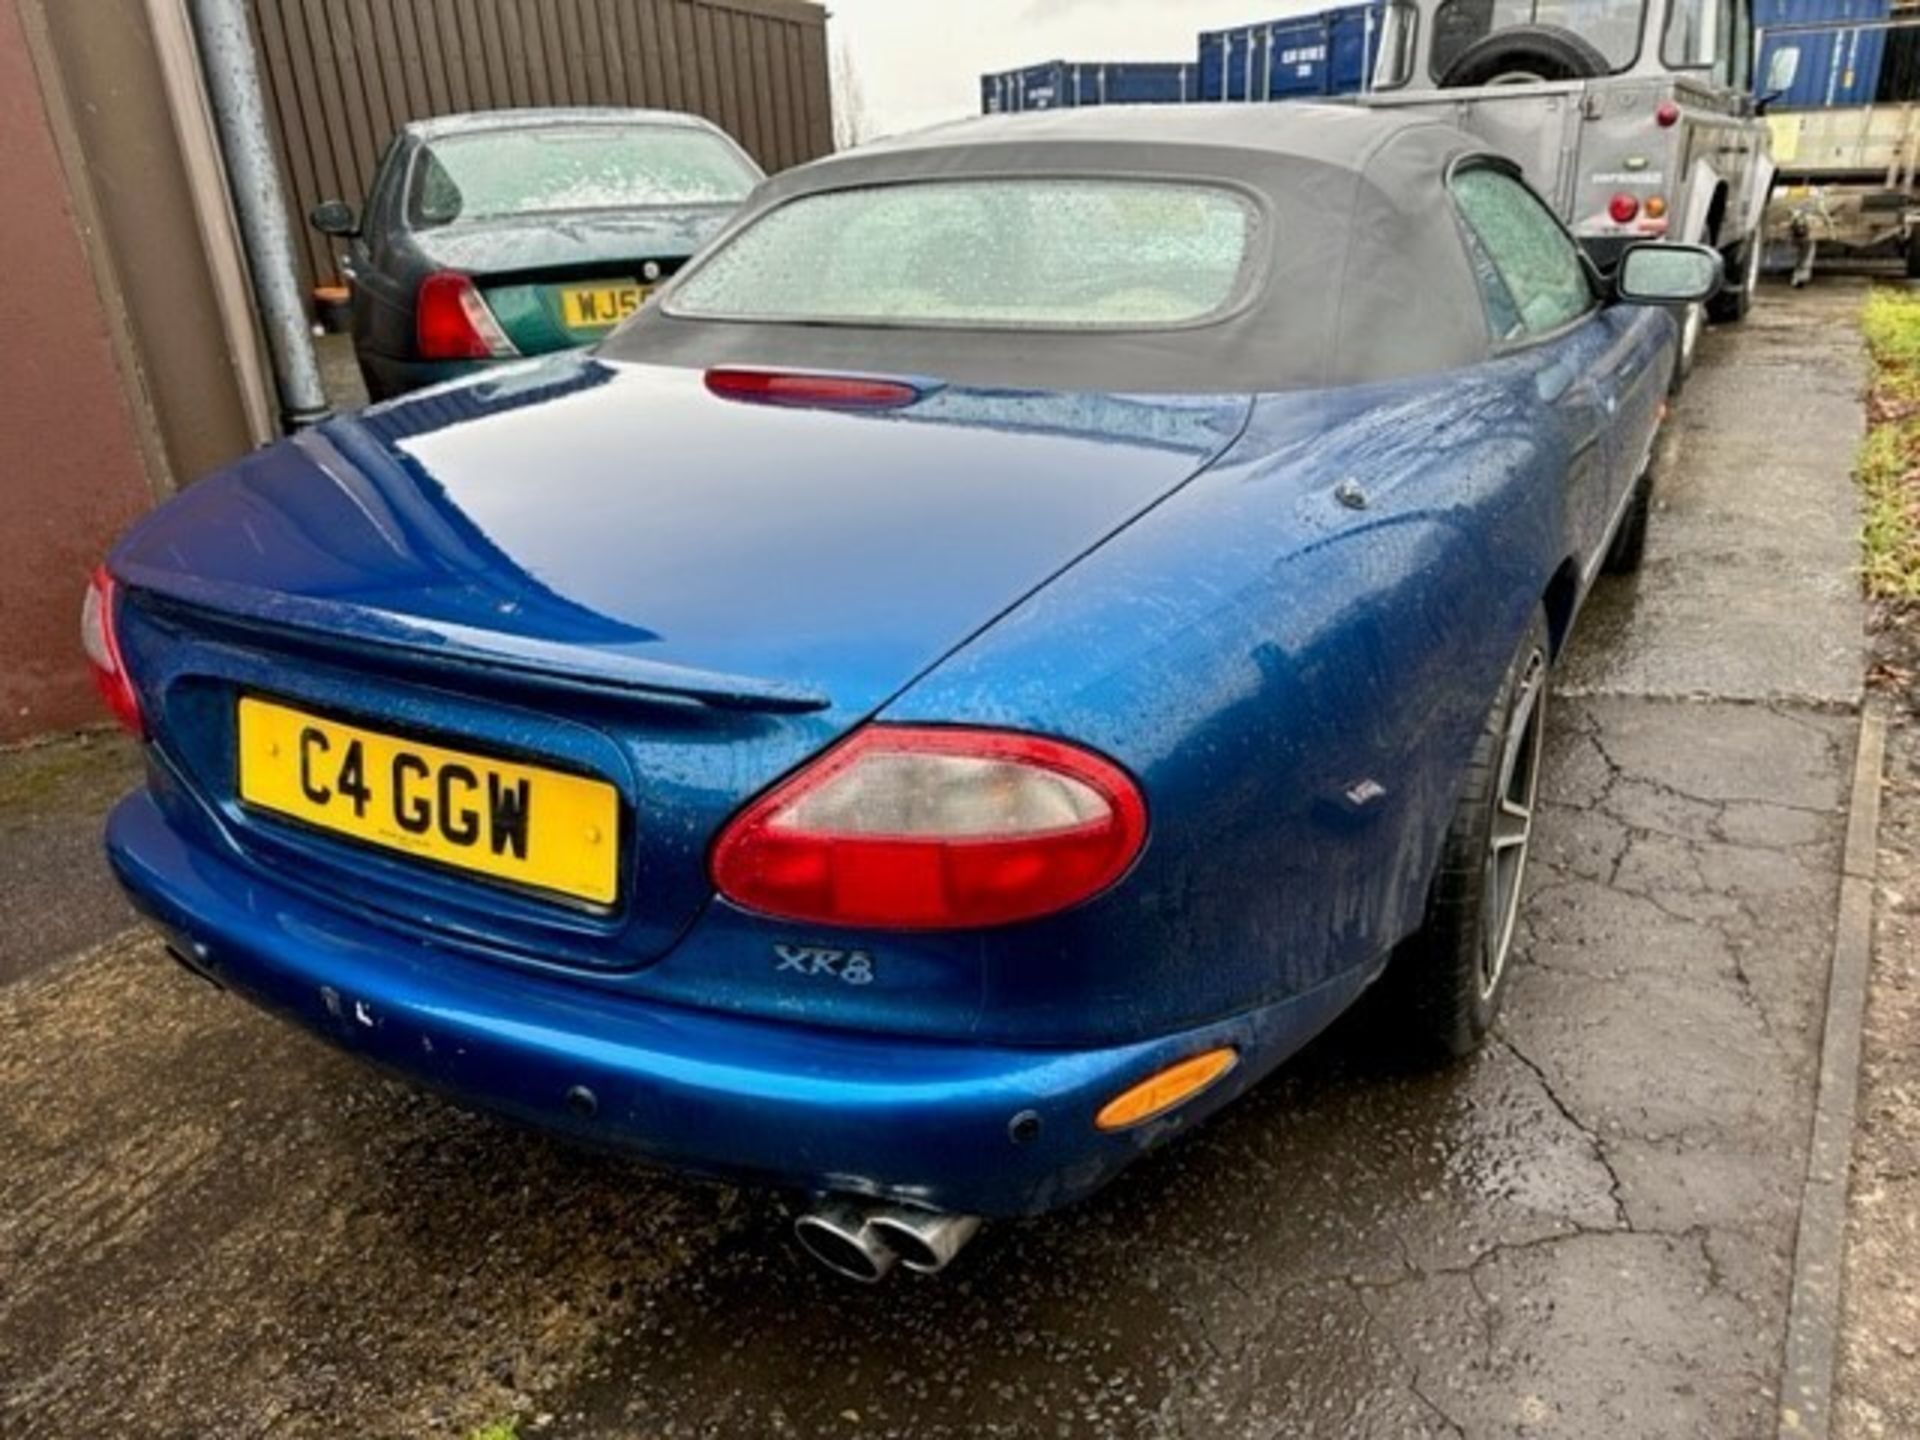 1997 Jaguar XK8 Convertible Registration number C4 GGW Metallic blue with - Image 6 of 17